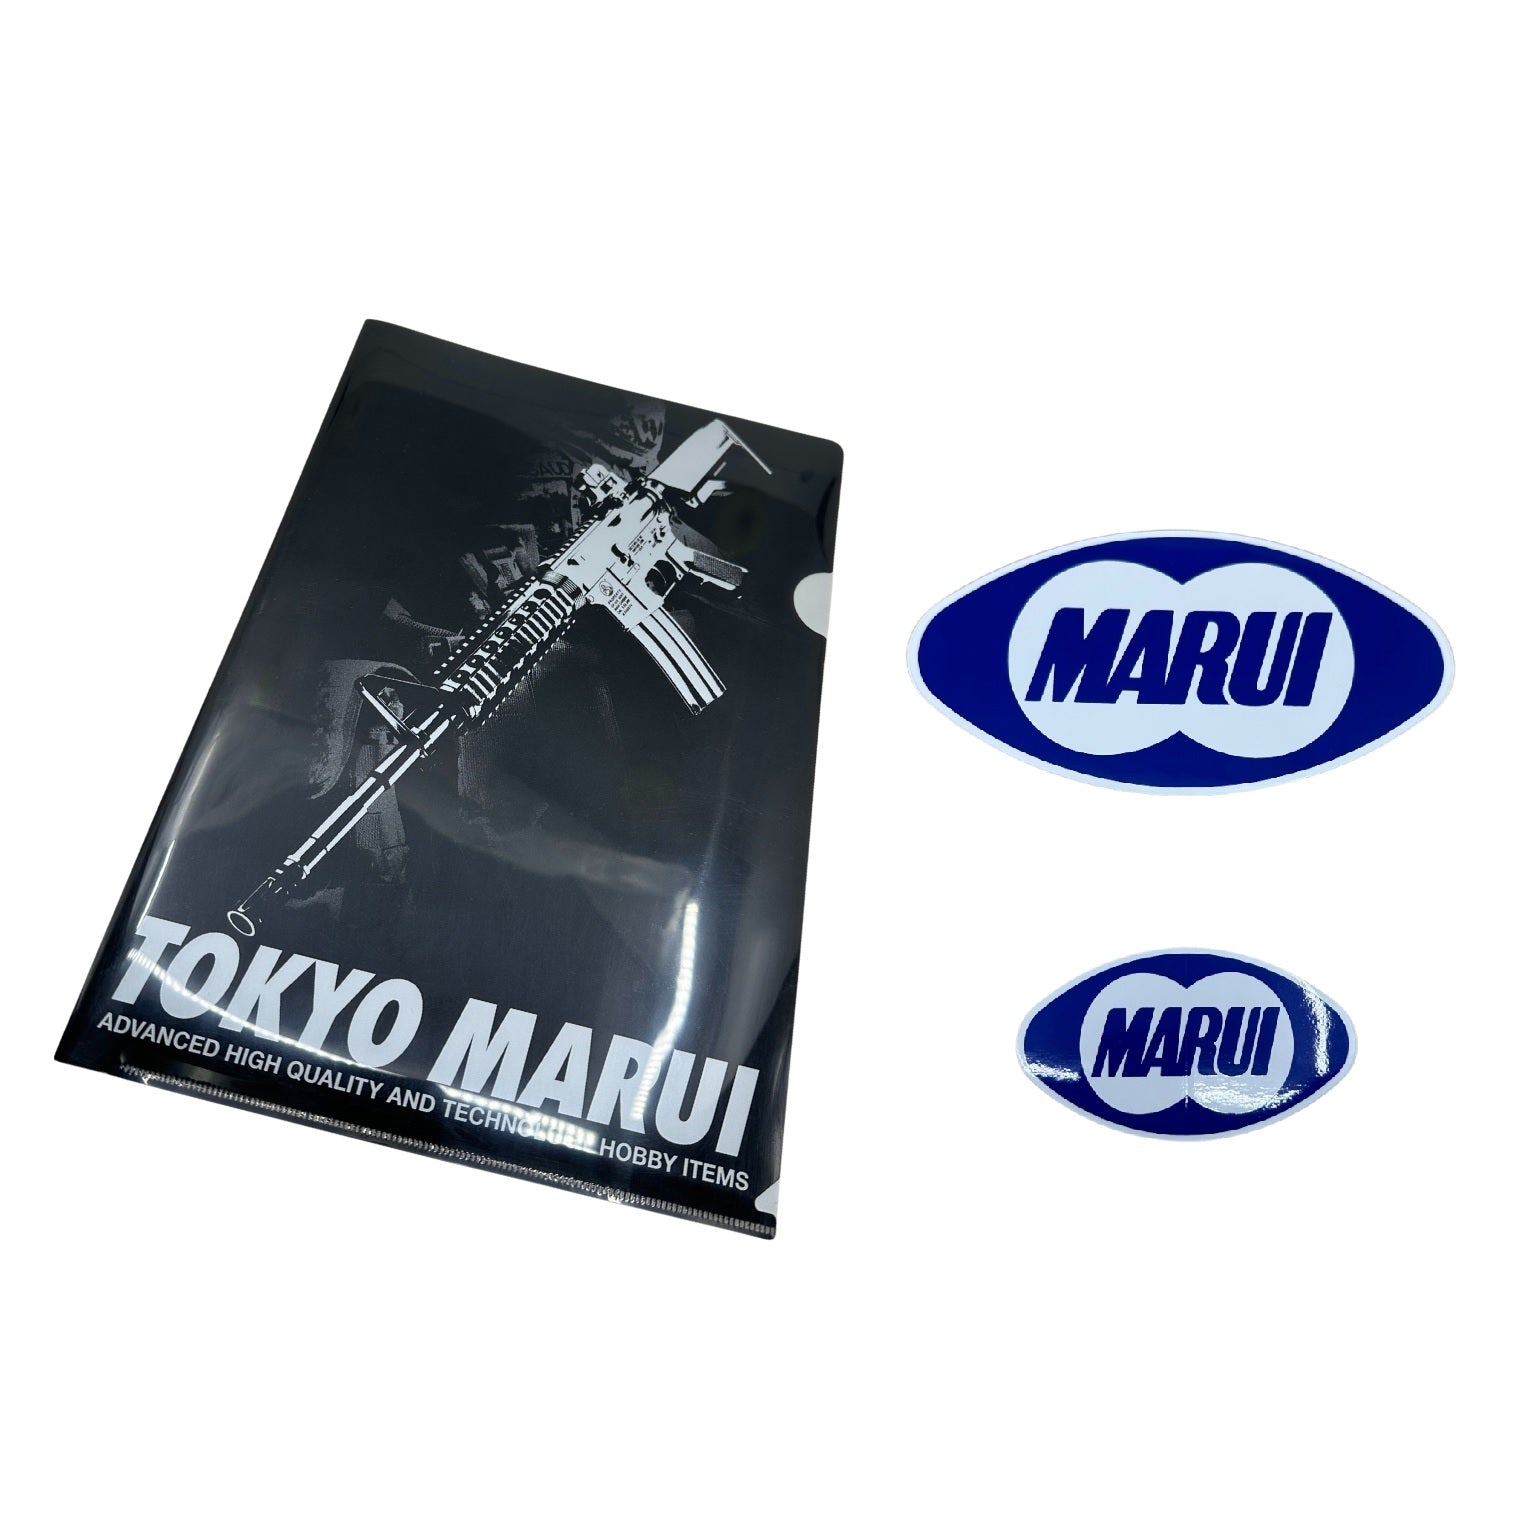 Tokyo Marui A4 Size Folder & Tokyo Marui Sticker Combo Set